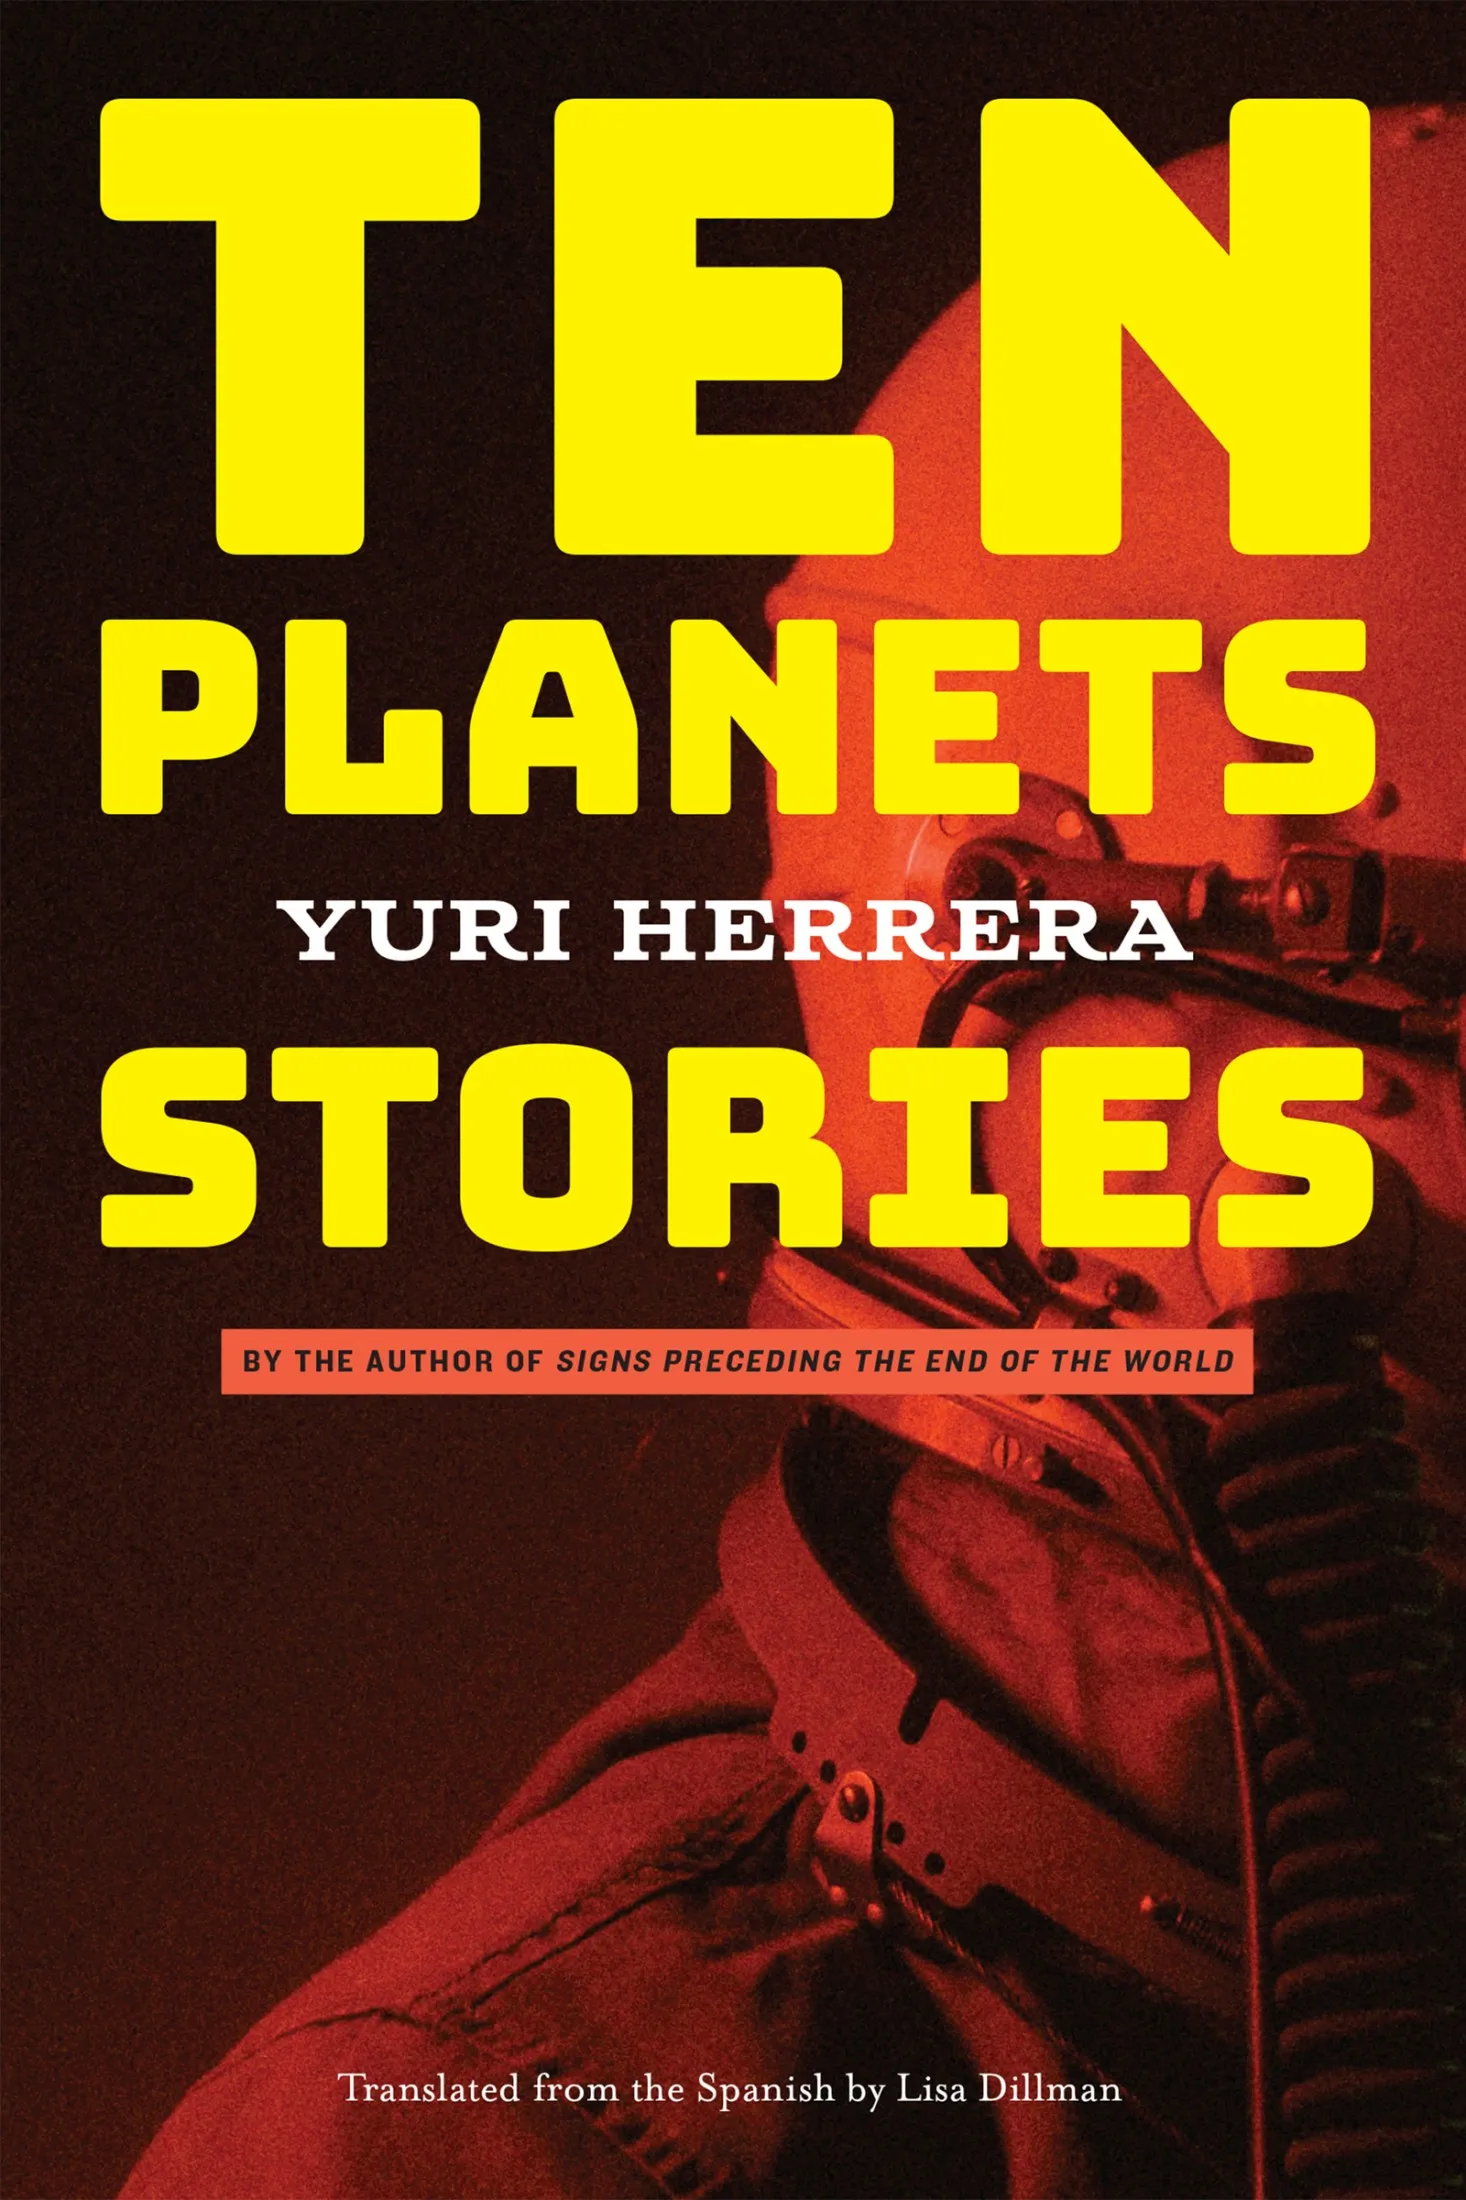 Ten Planets: Stories